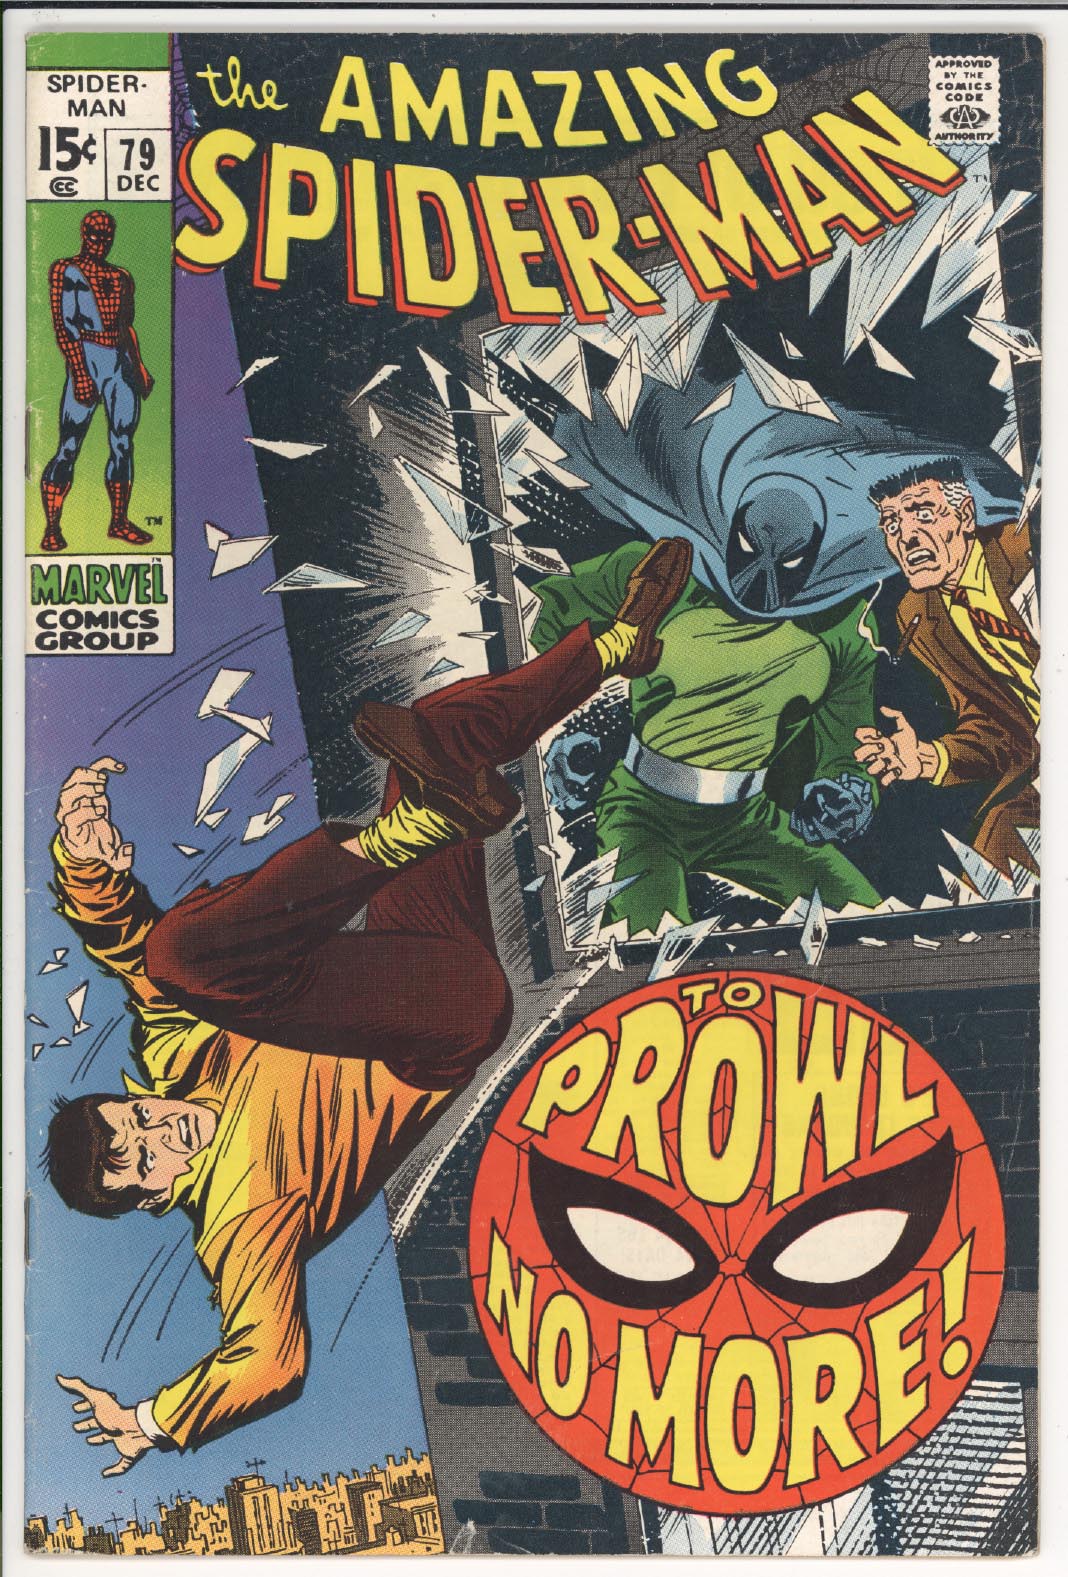 Amazing Spider-Man #79 front